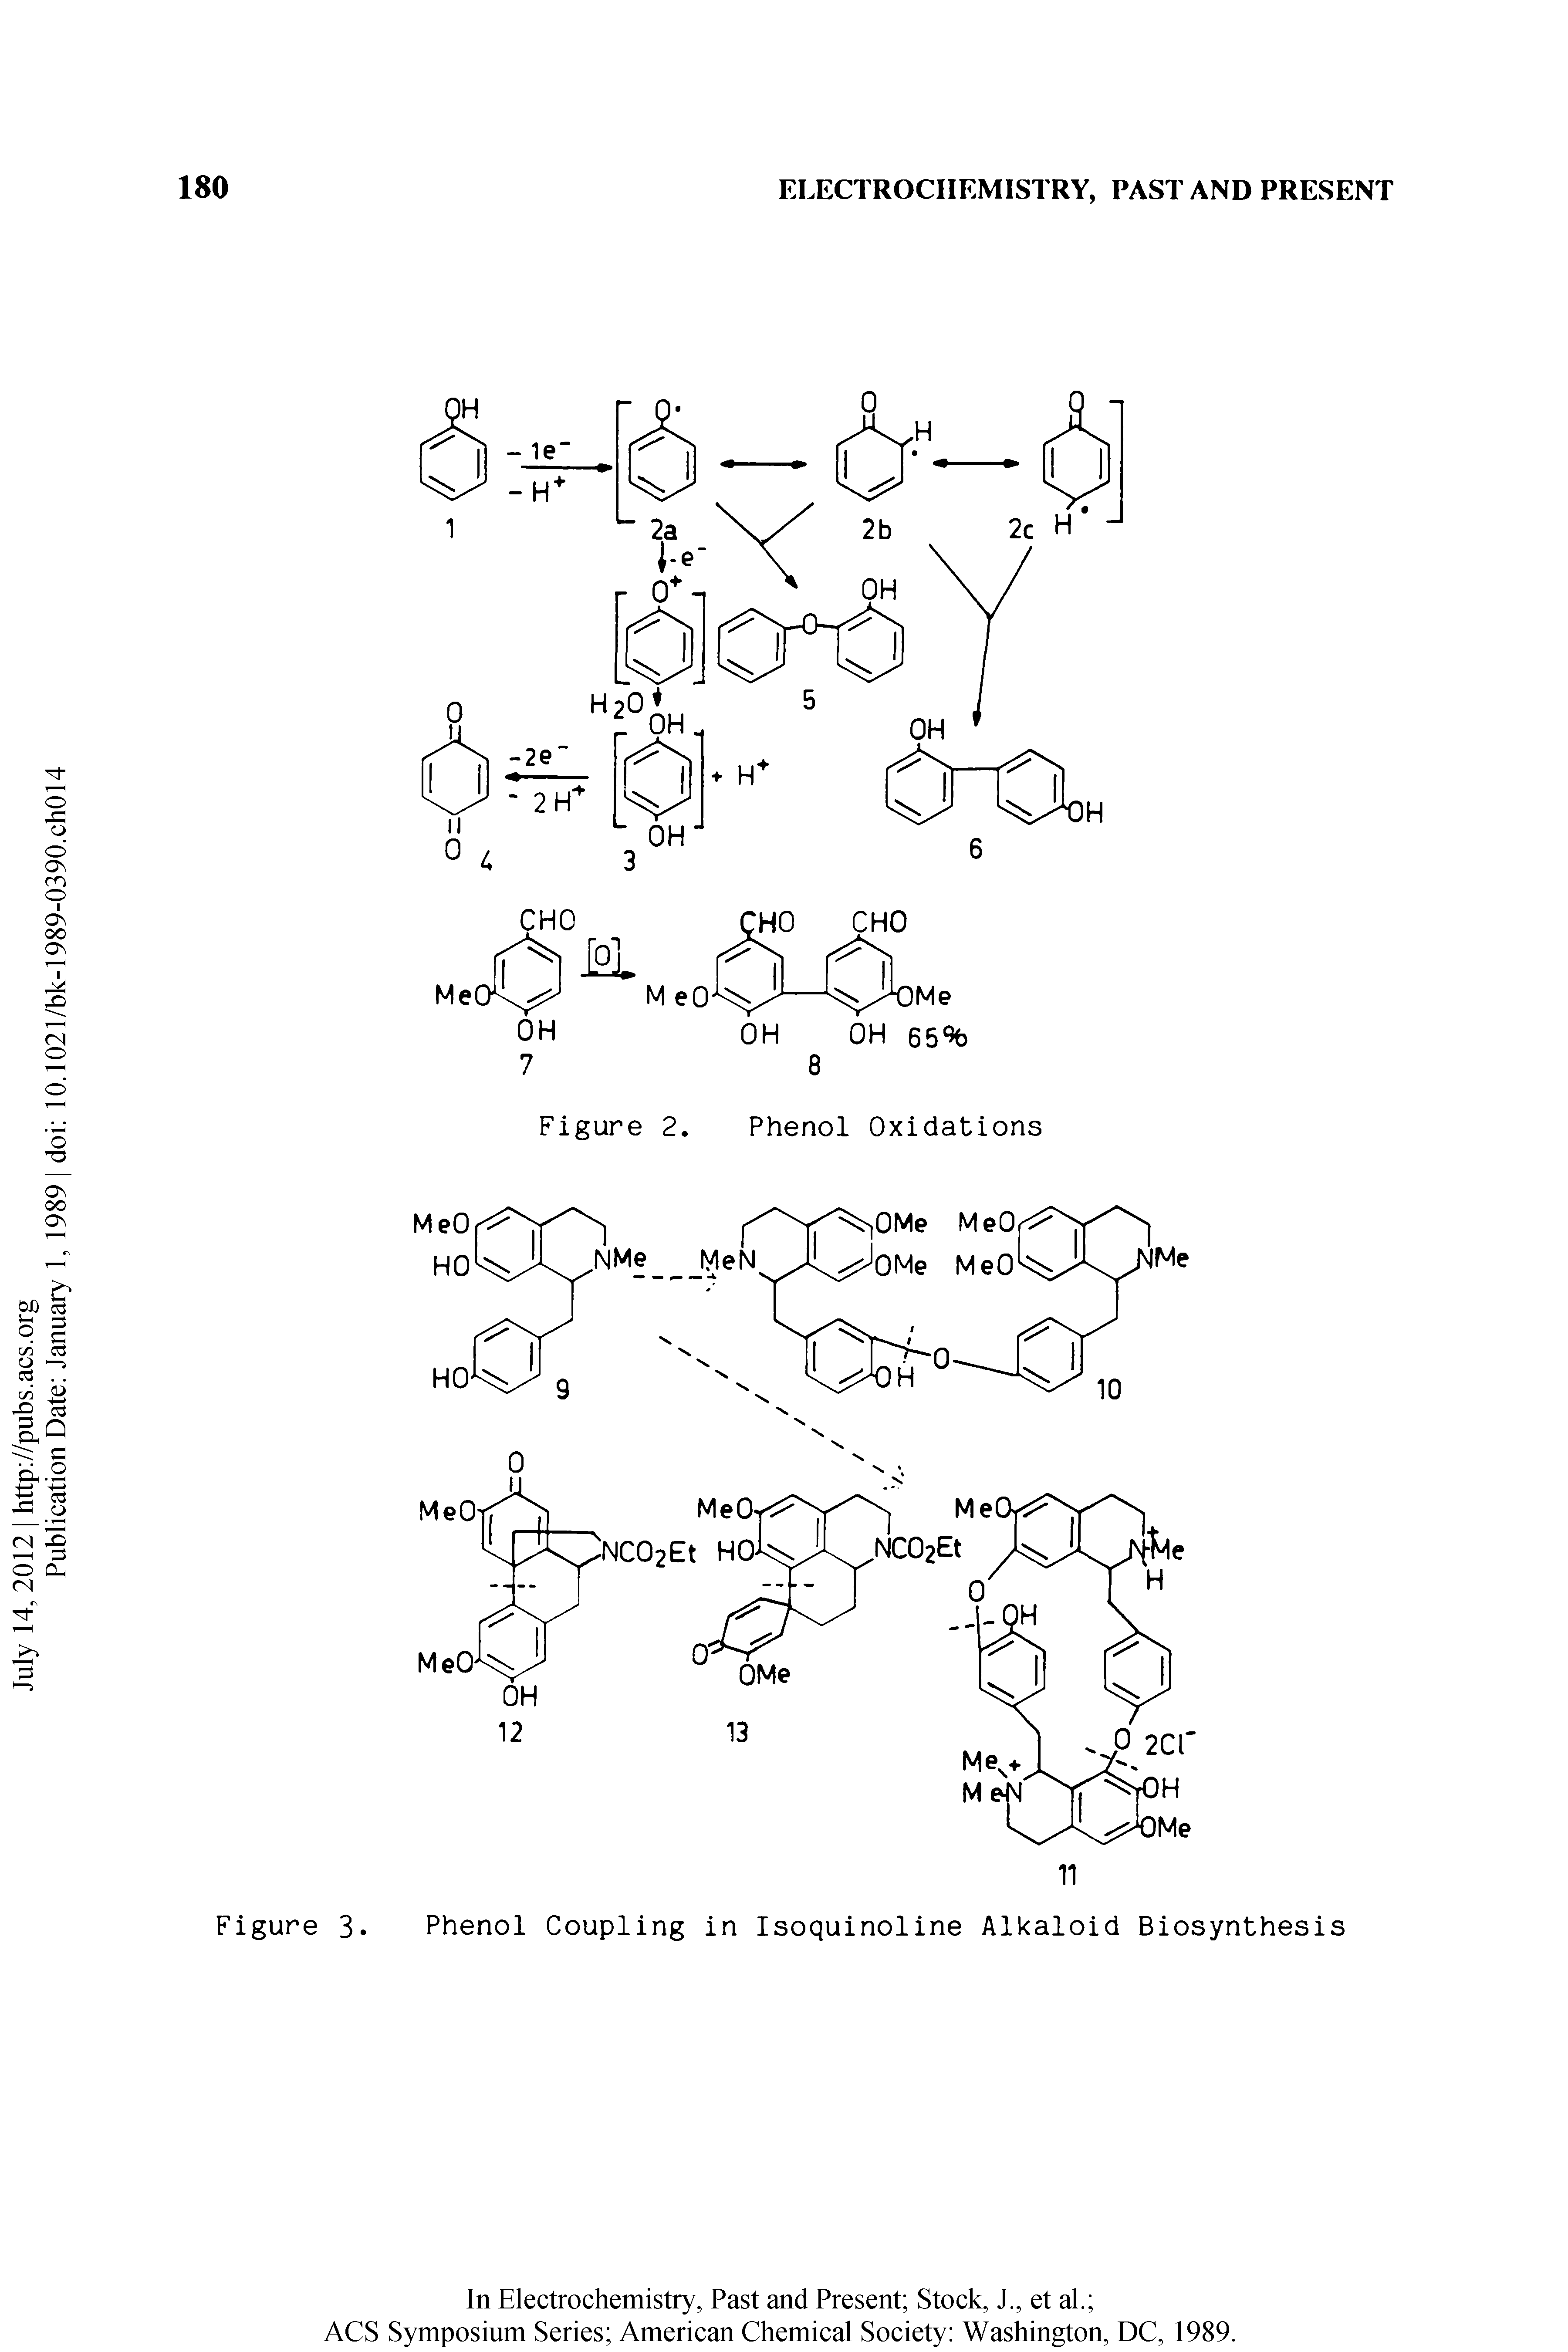 Figure 3. Phenol Coupling in Isoquinoline Alkaloid Biosynthesis...